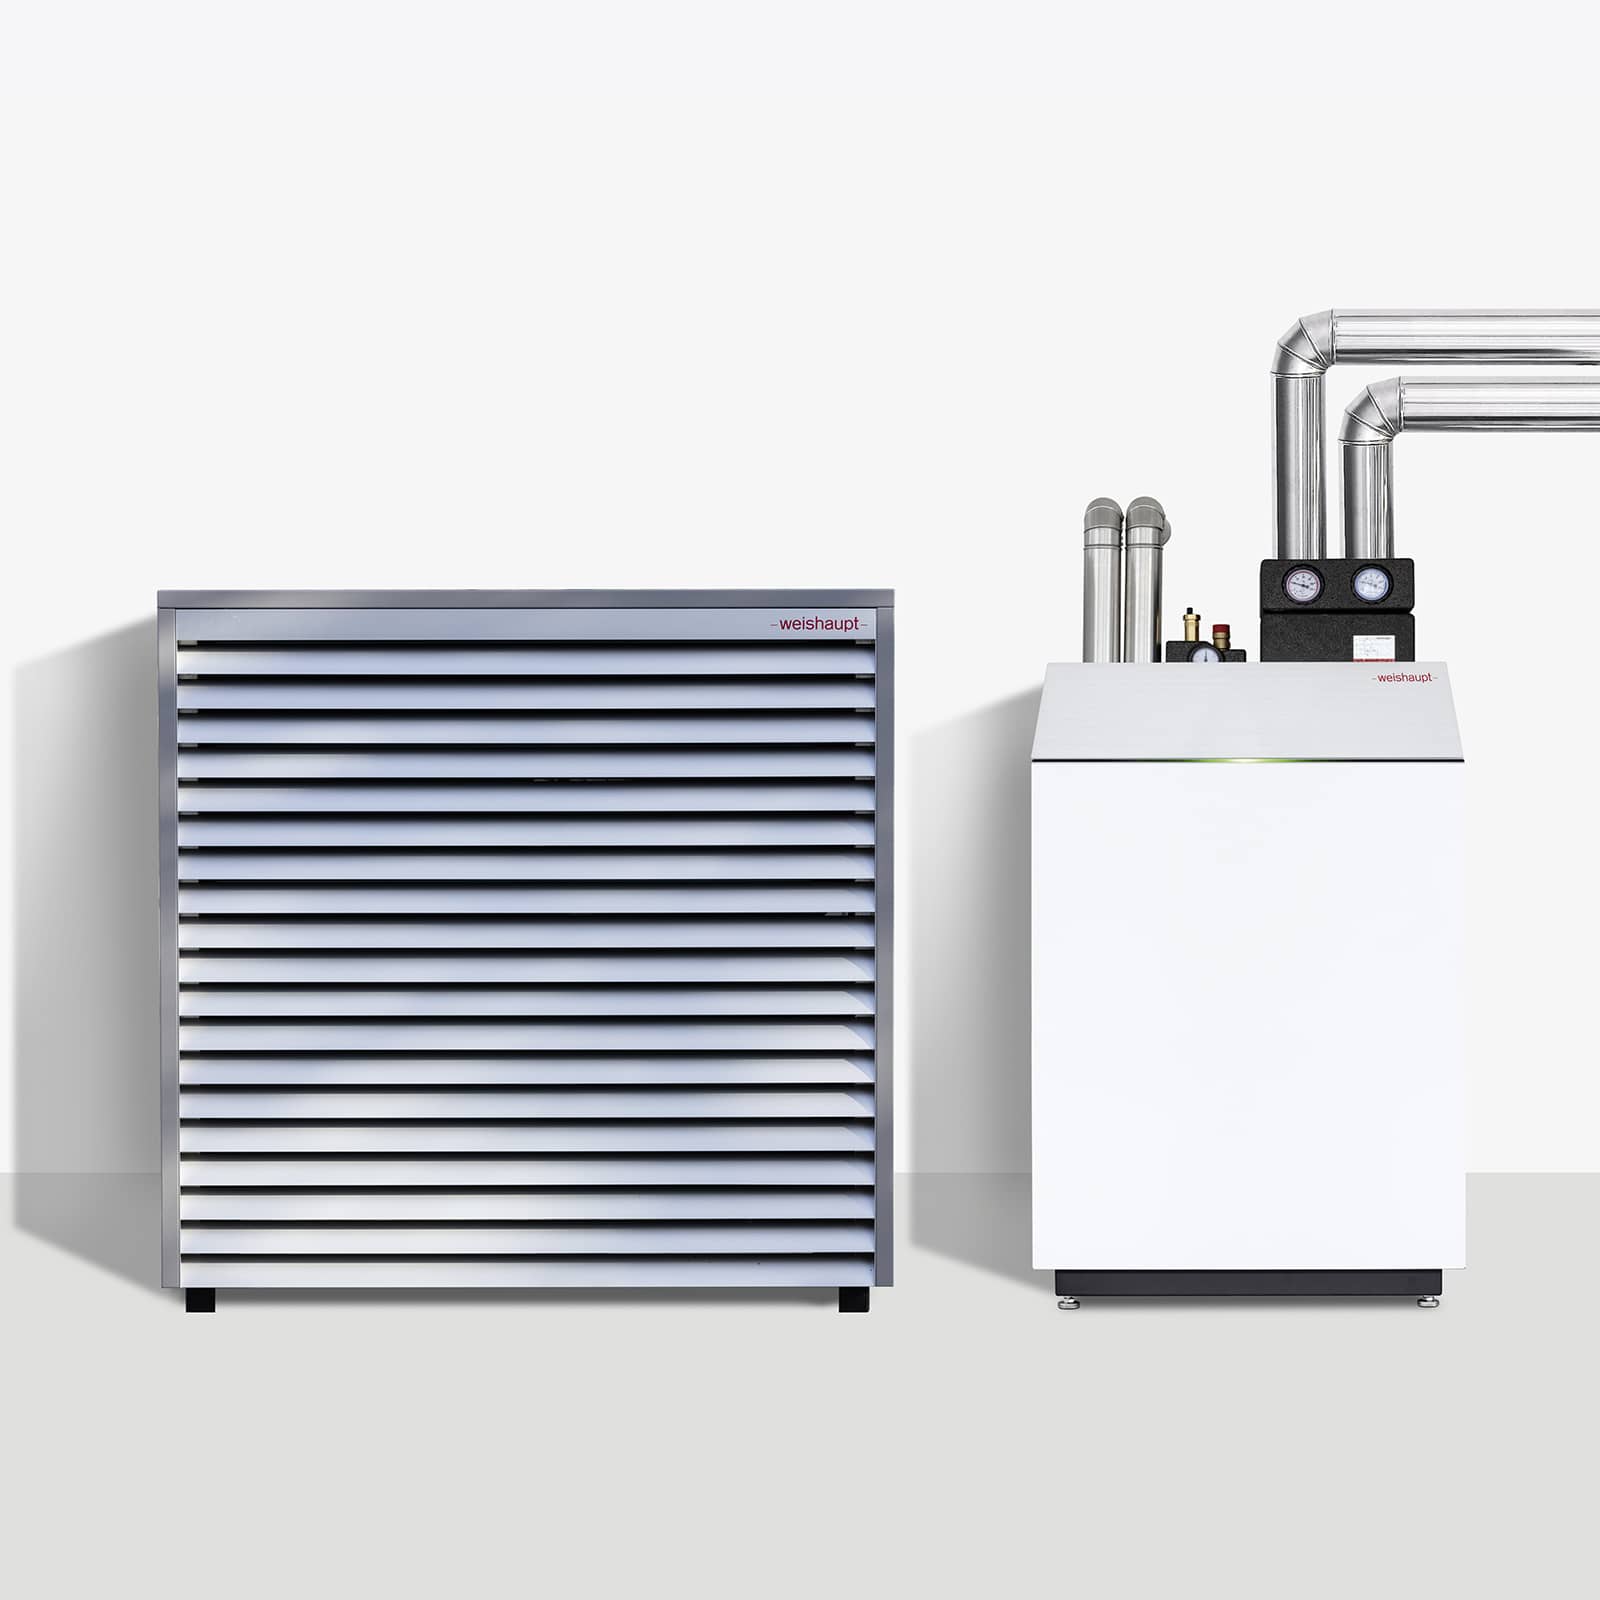 Weishaupt BiBloc air-to-water heat pump (WBB)